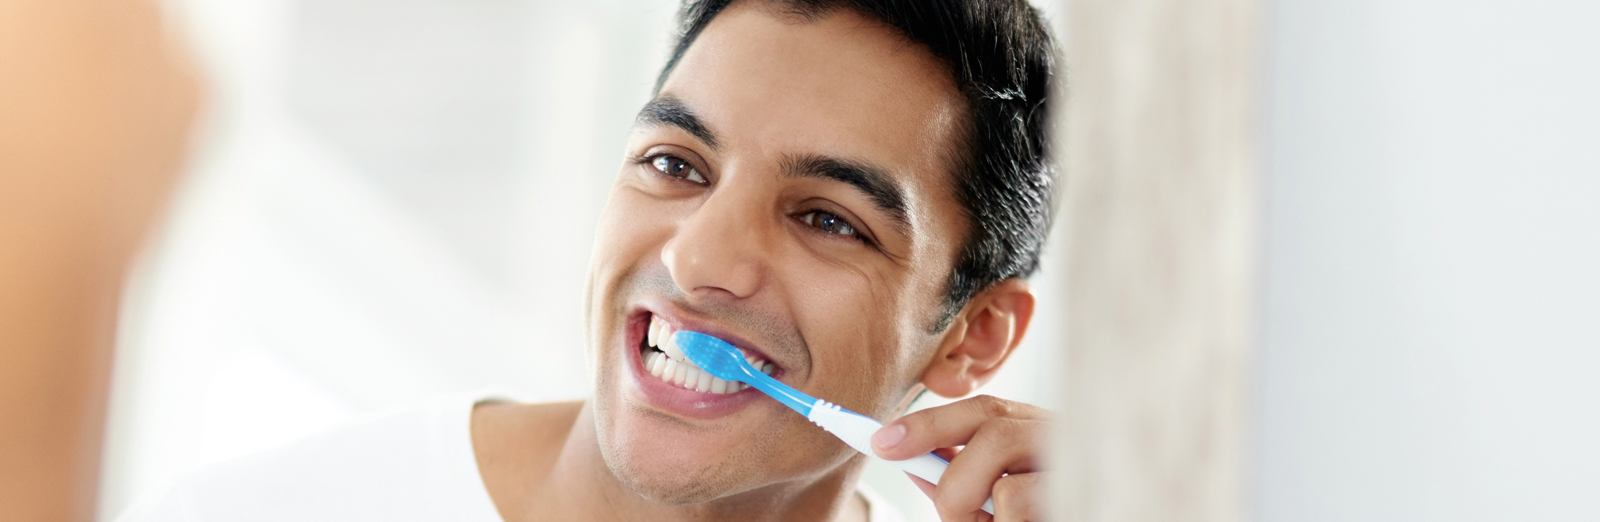 man-brushing-teeth-1600x522.jpg